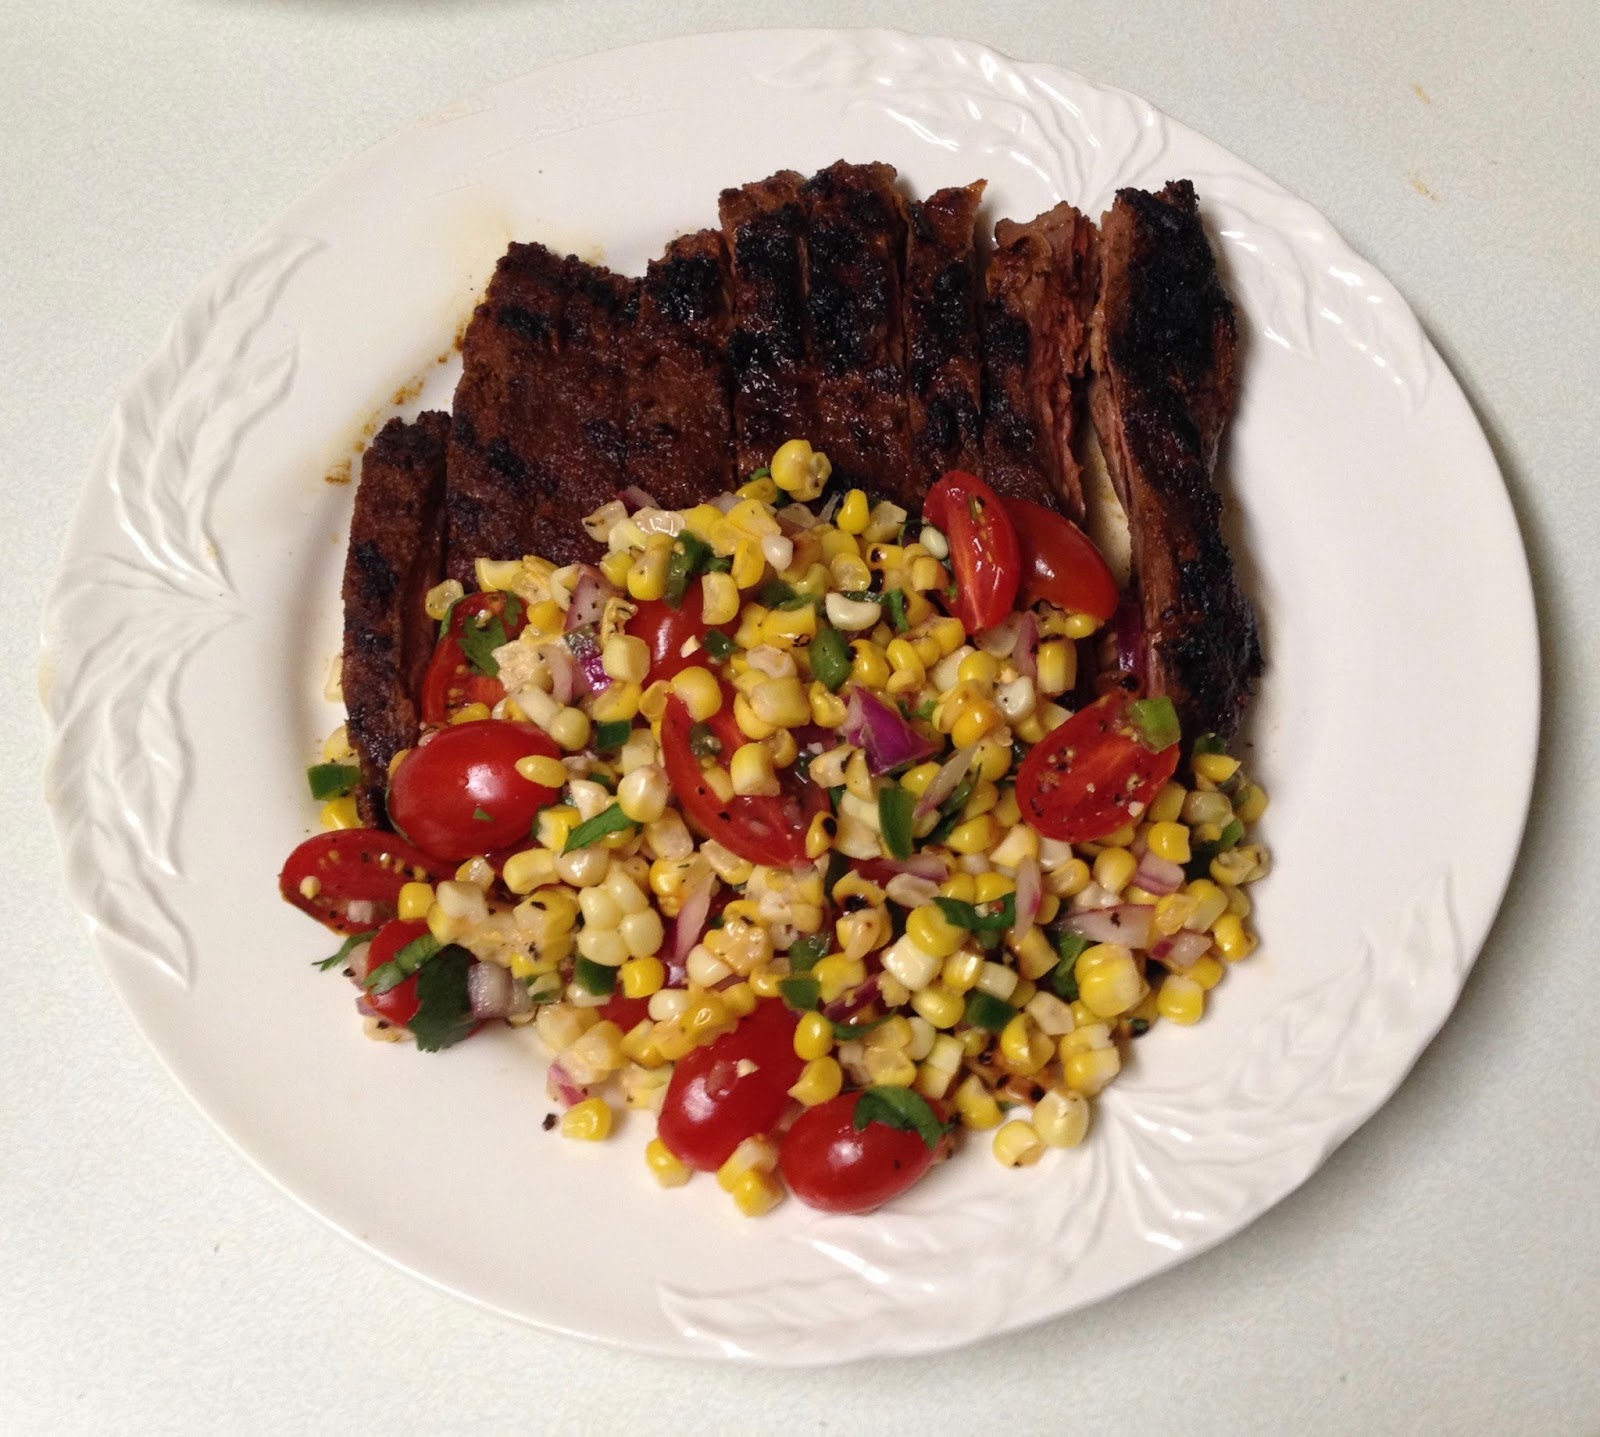 Spice-Rubbed Flank Steak With Corn-Chile Relish Recipe